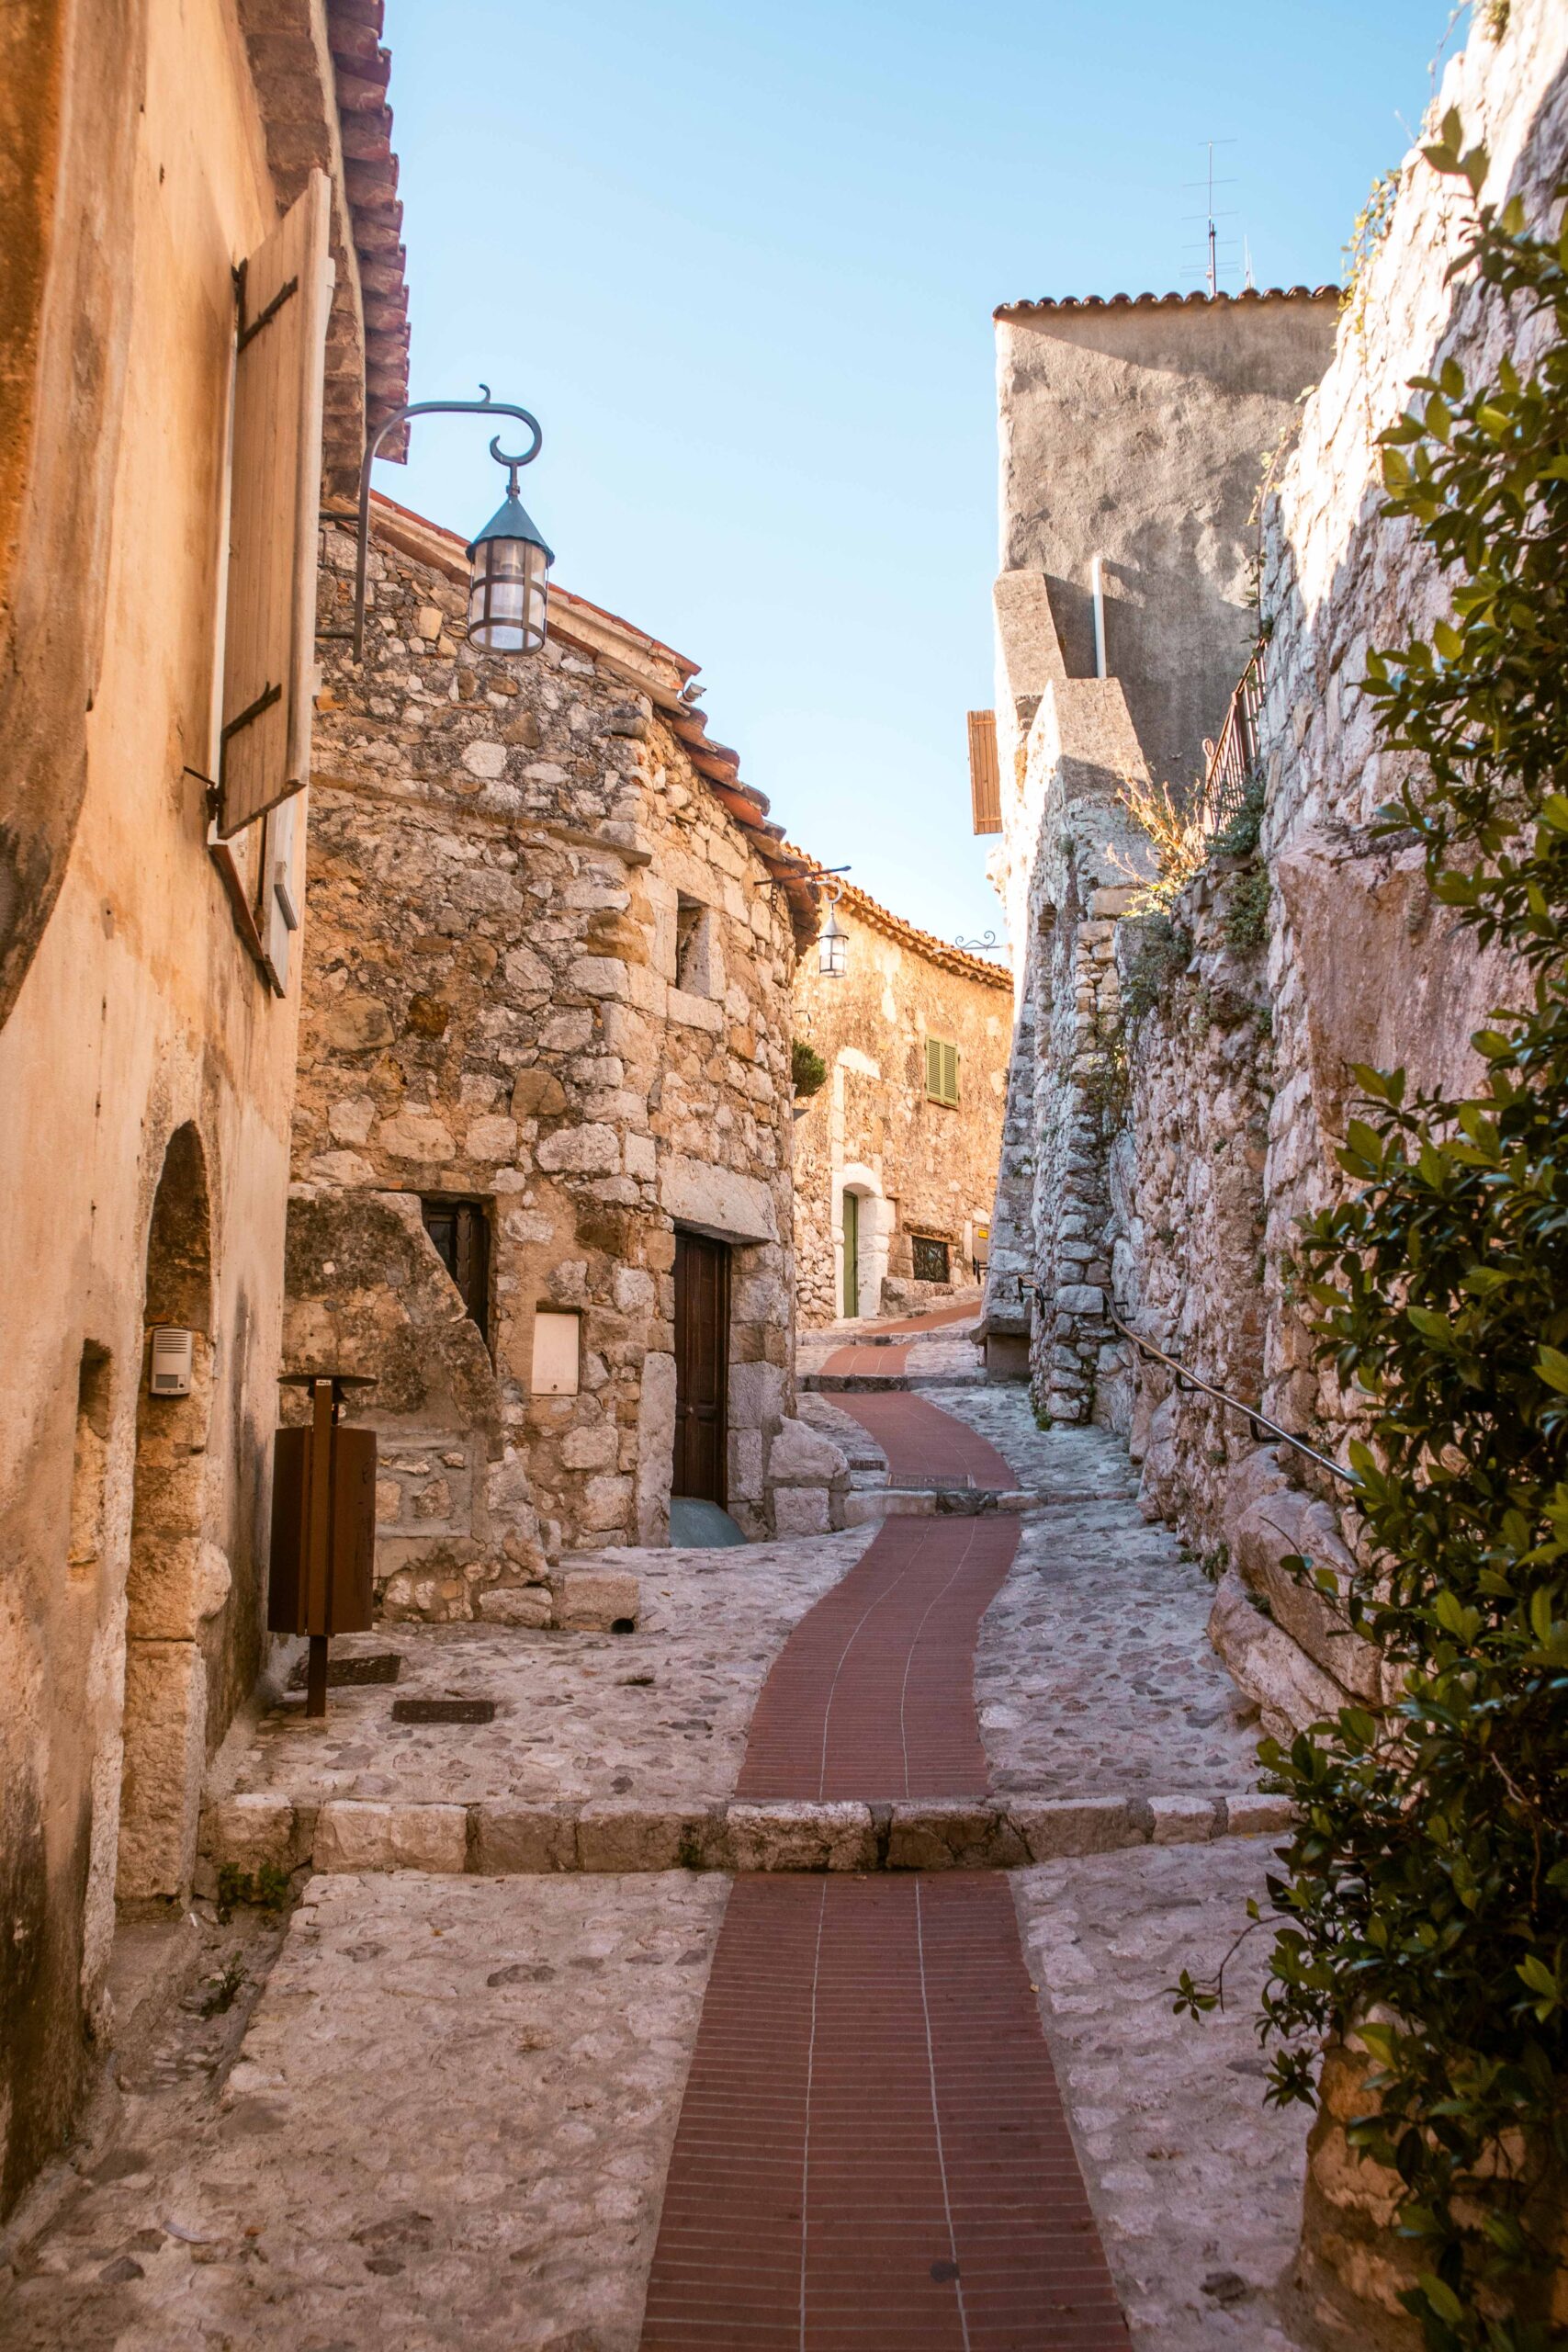 Small empty cobblestone street in Eze Village, France